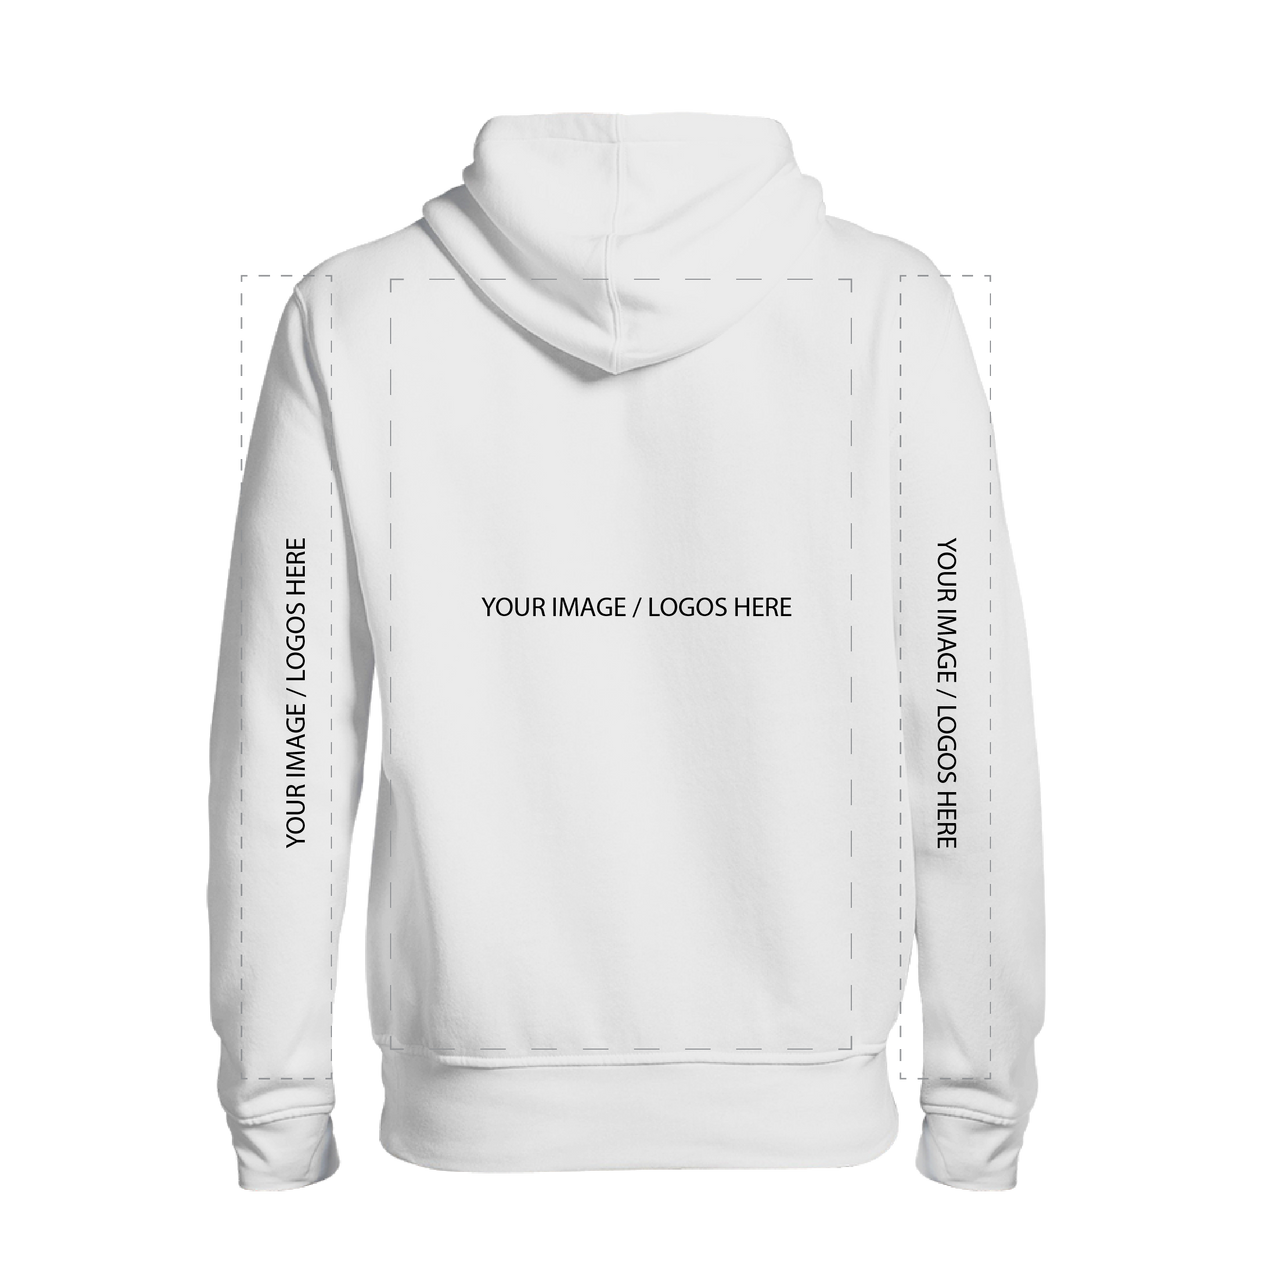 custom team hoodies made to order designed in house sweatshirts